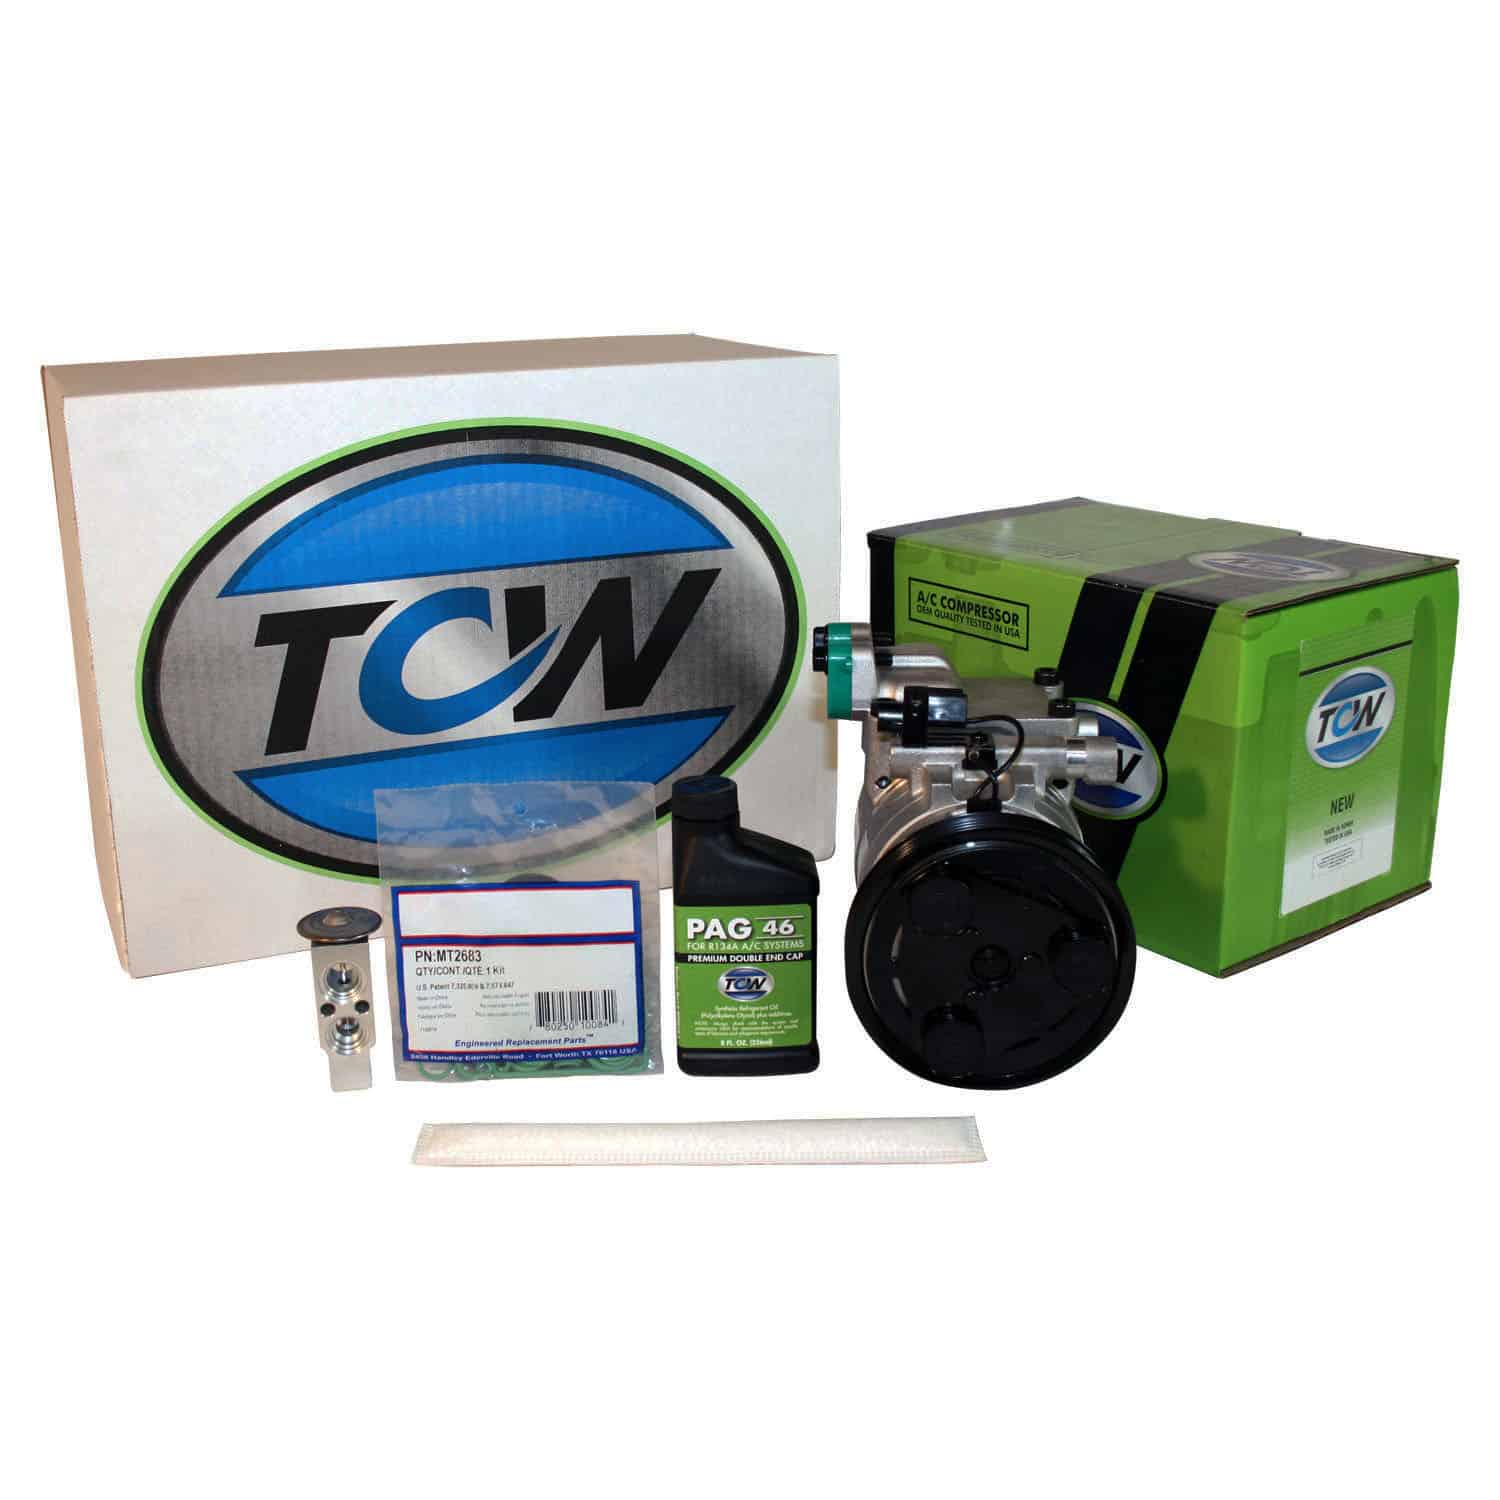 TCW Vehicle A/C Kit K1000454N New Product Image field_60b6a13a6e67c